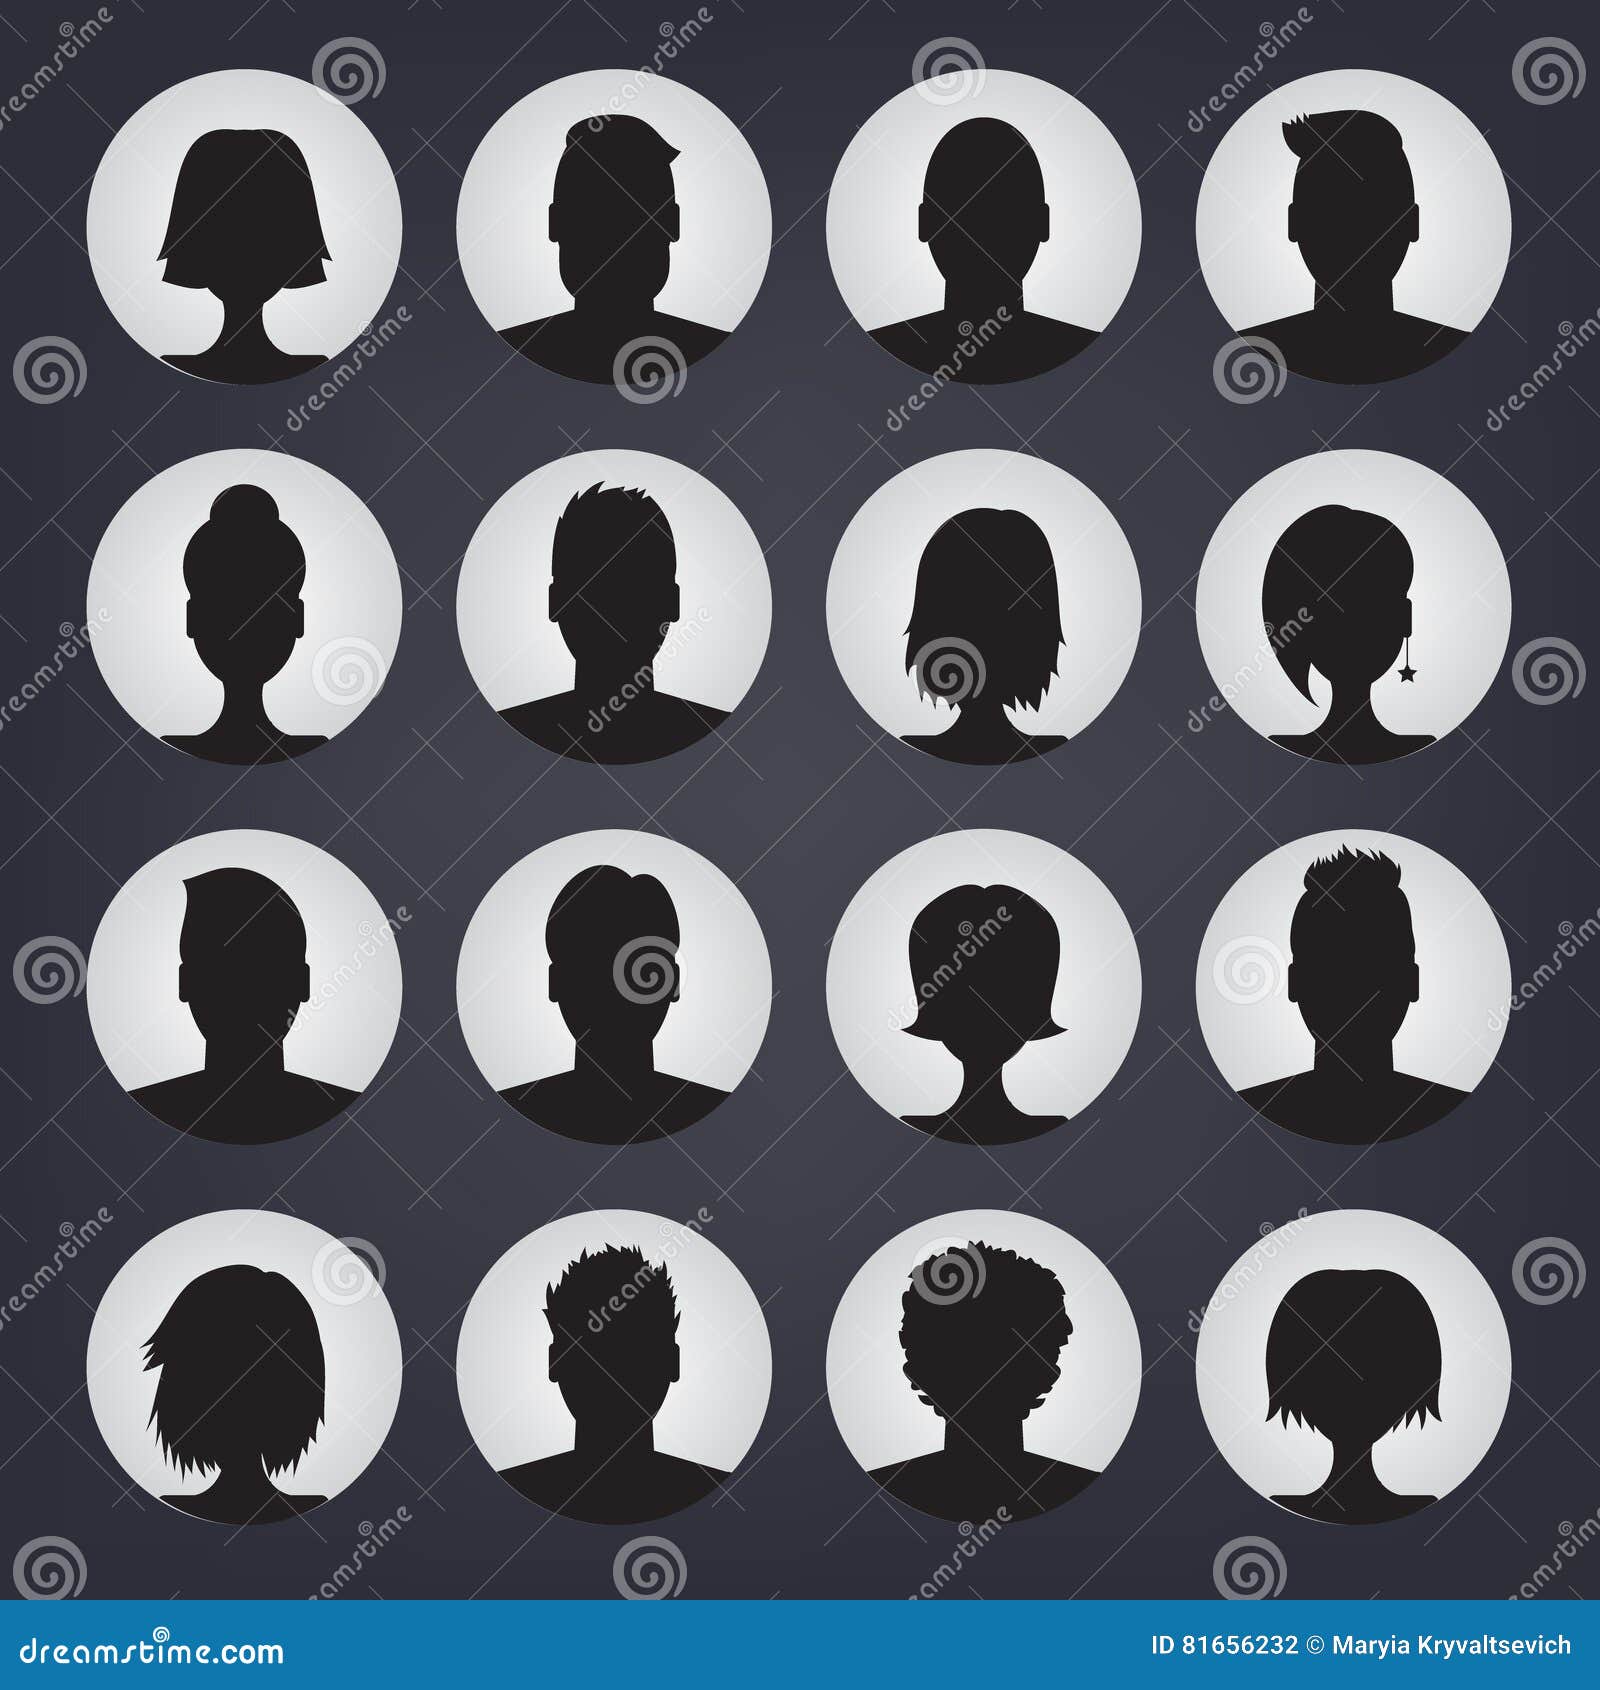 Monochrome woman avatar silhouette. User icon vector in trendy